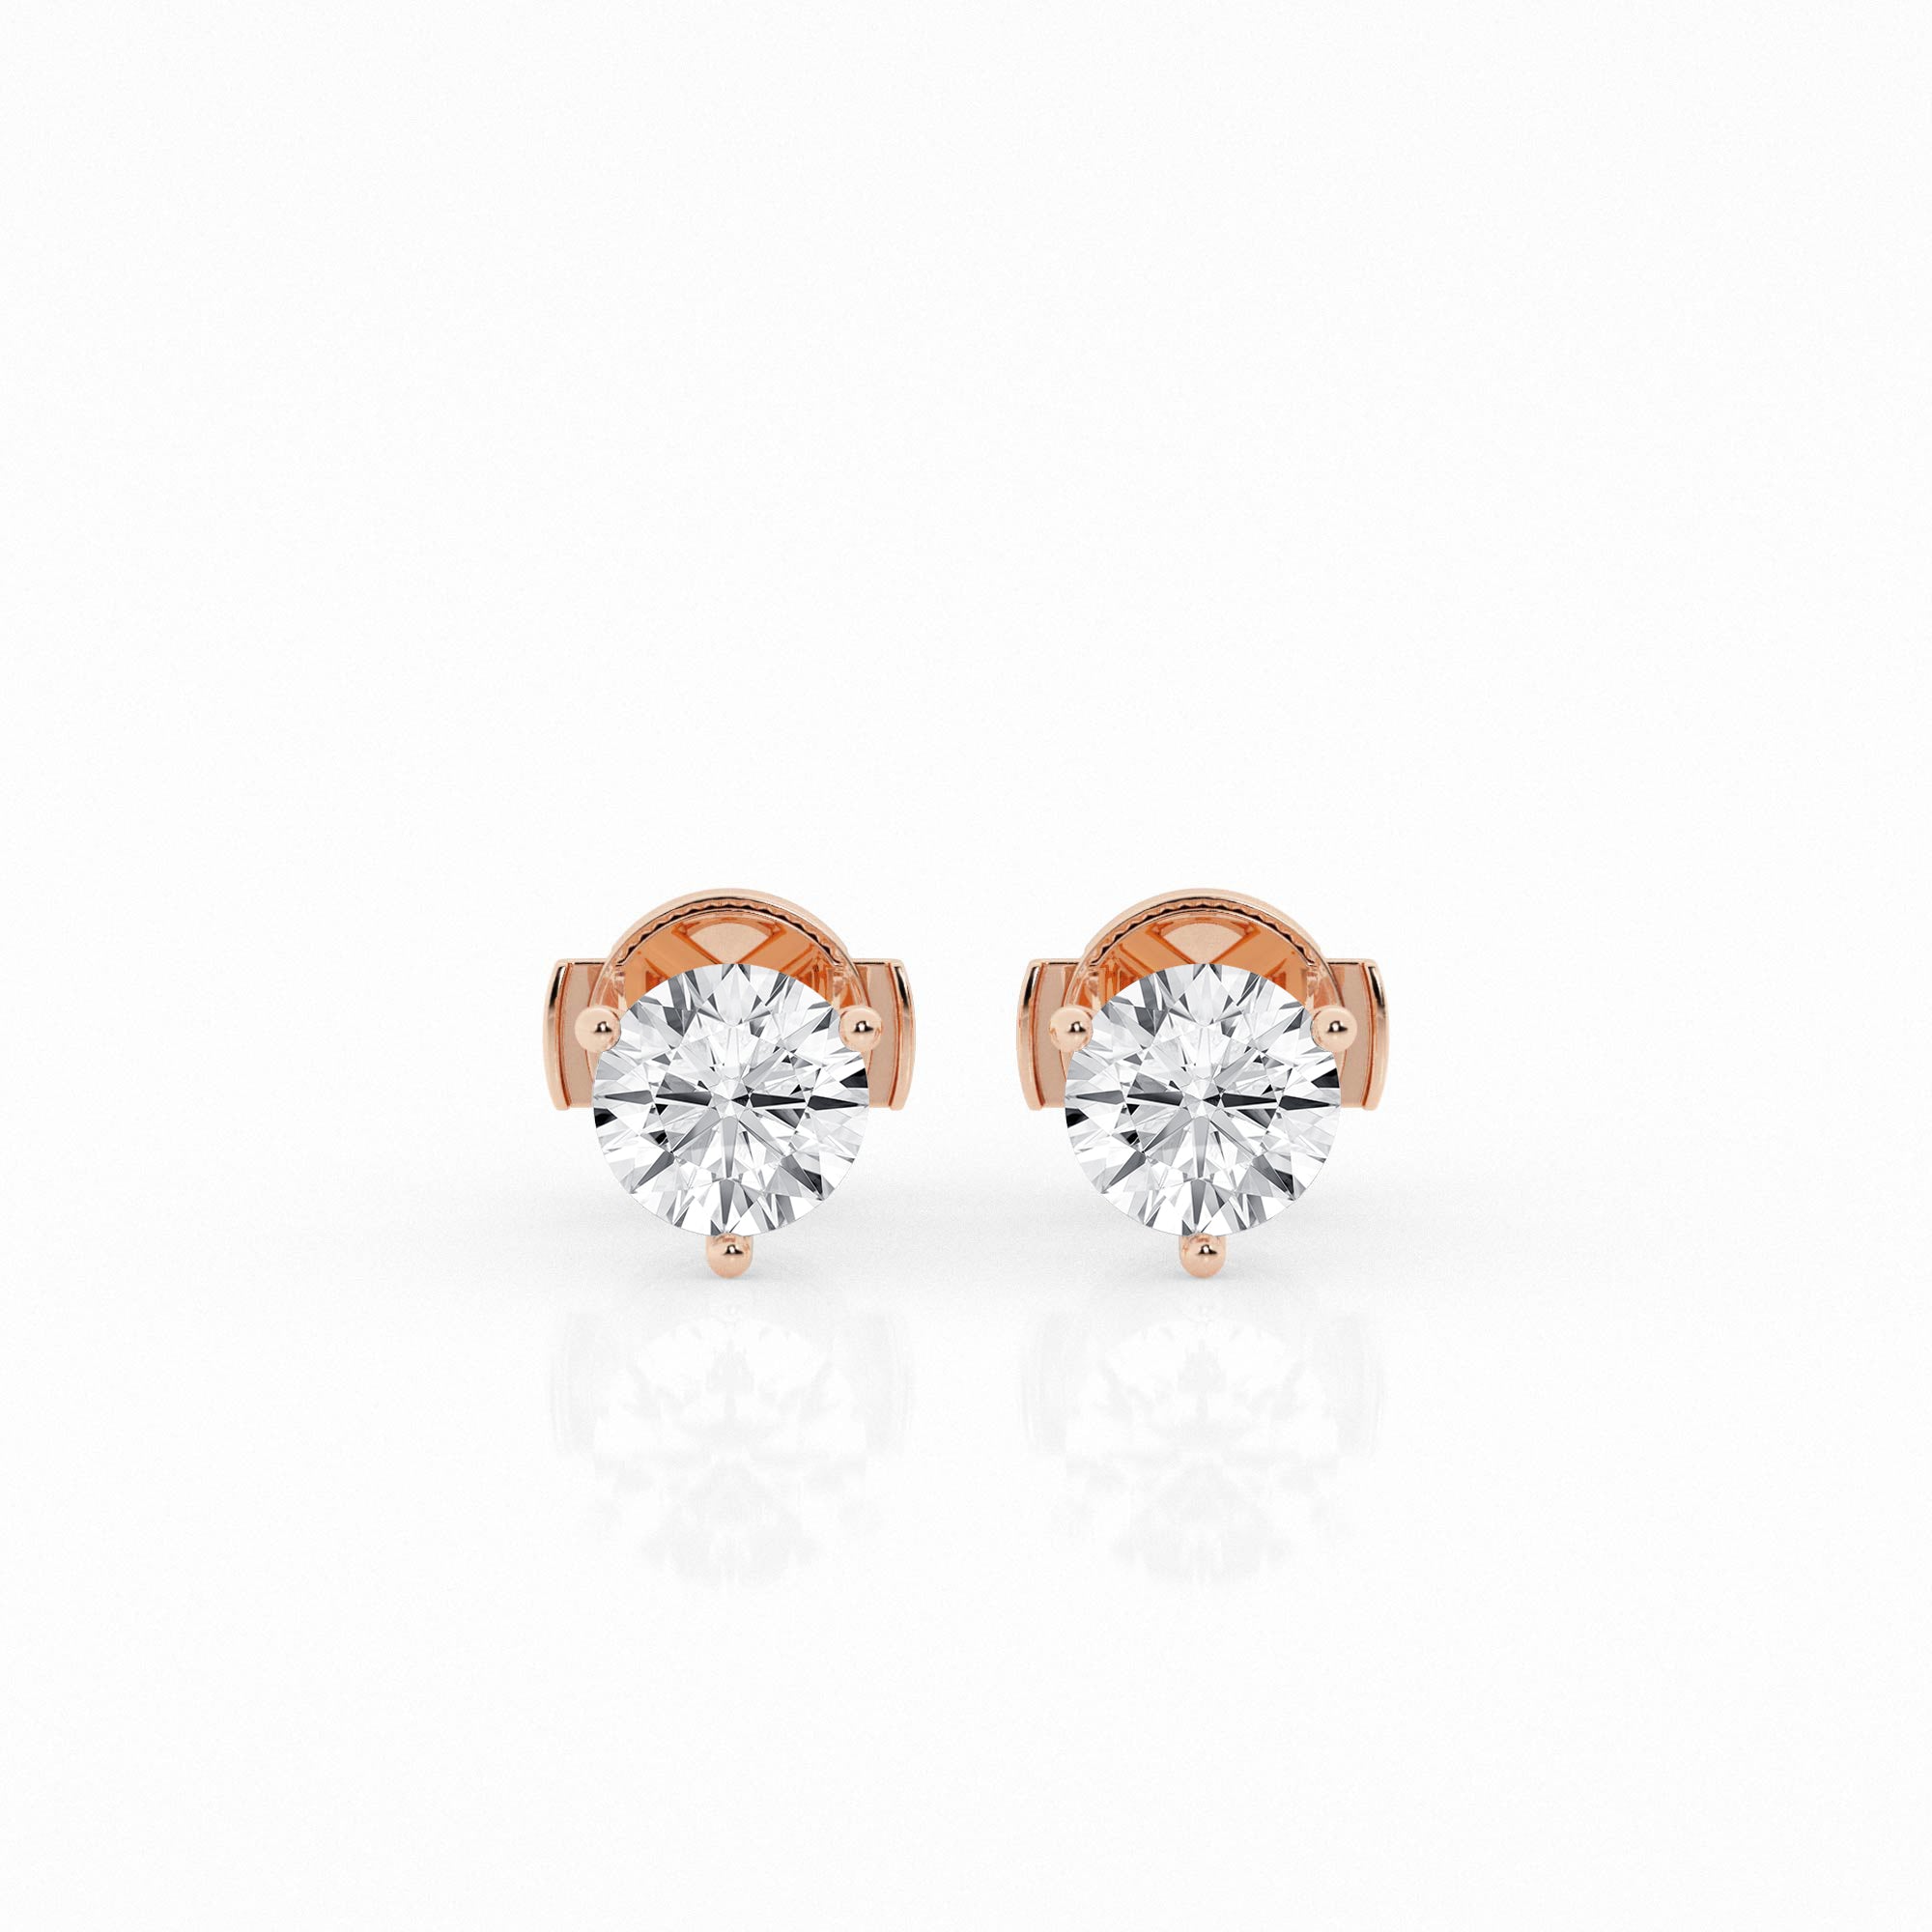 Rose gold stud earrings showcasing 1.5 carat lab-grown round diamonds